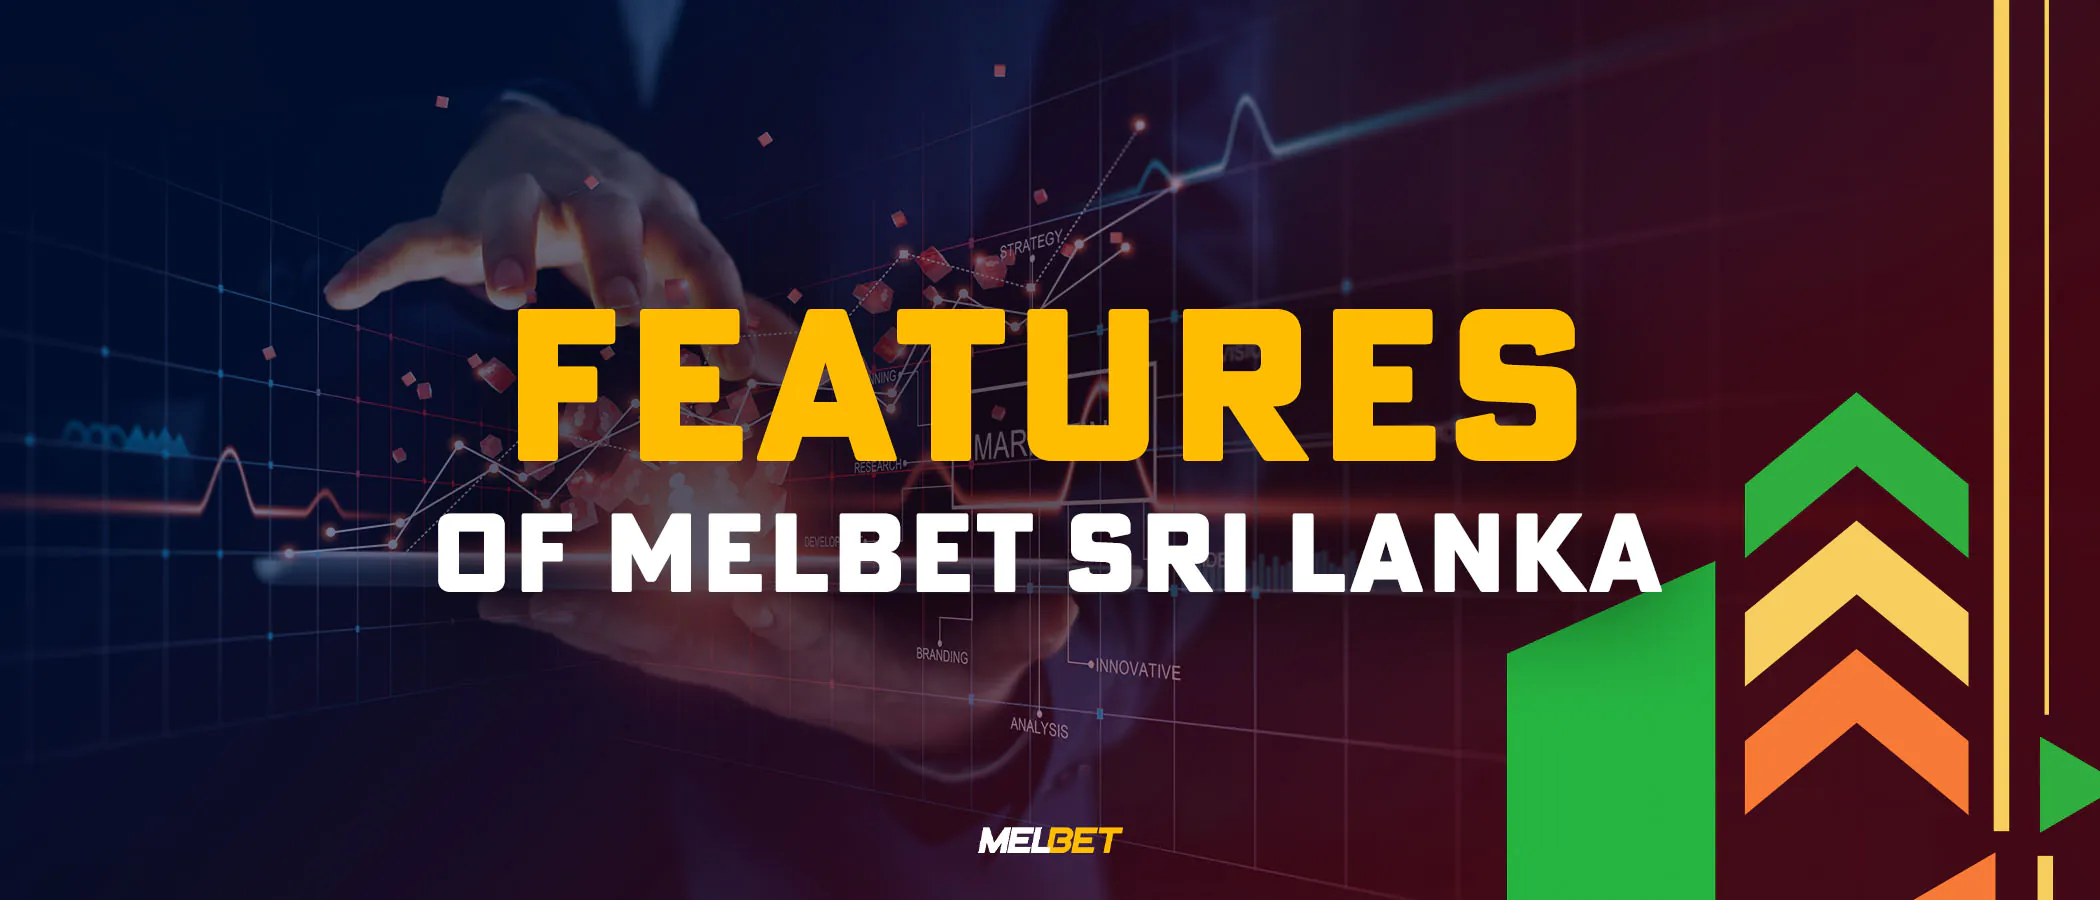 Features of Melbet Sri Lanka